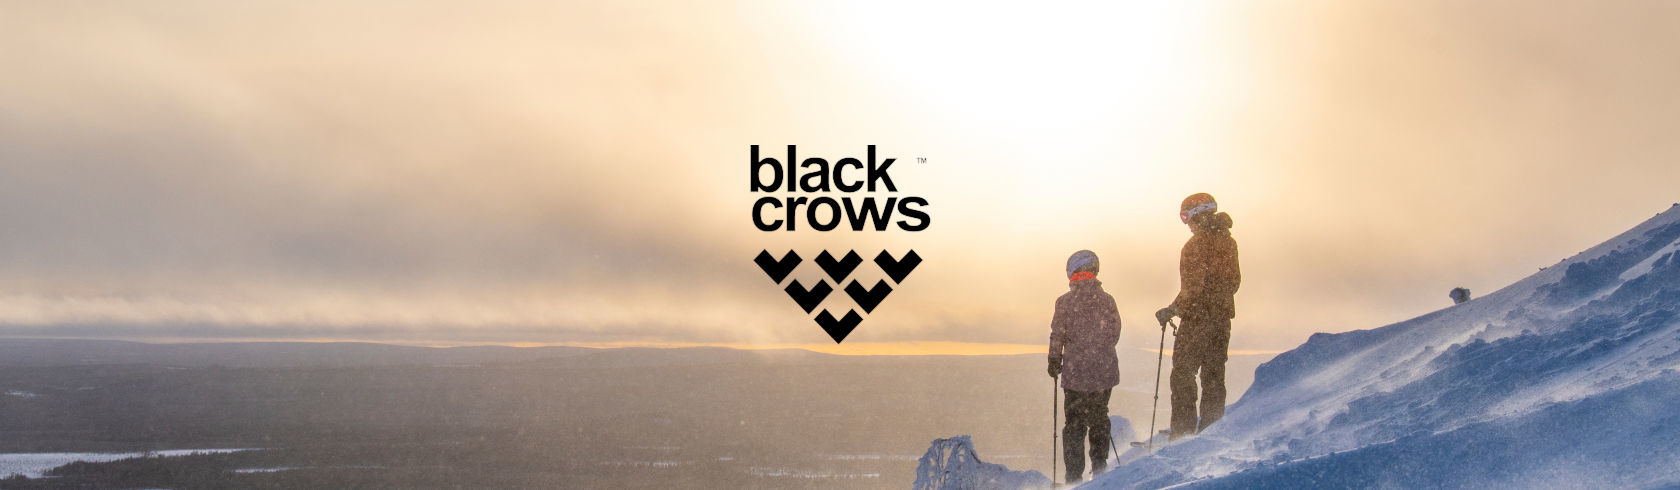 Black Crows brand logo